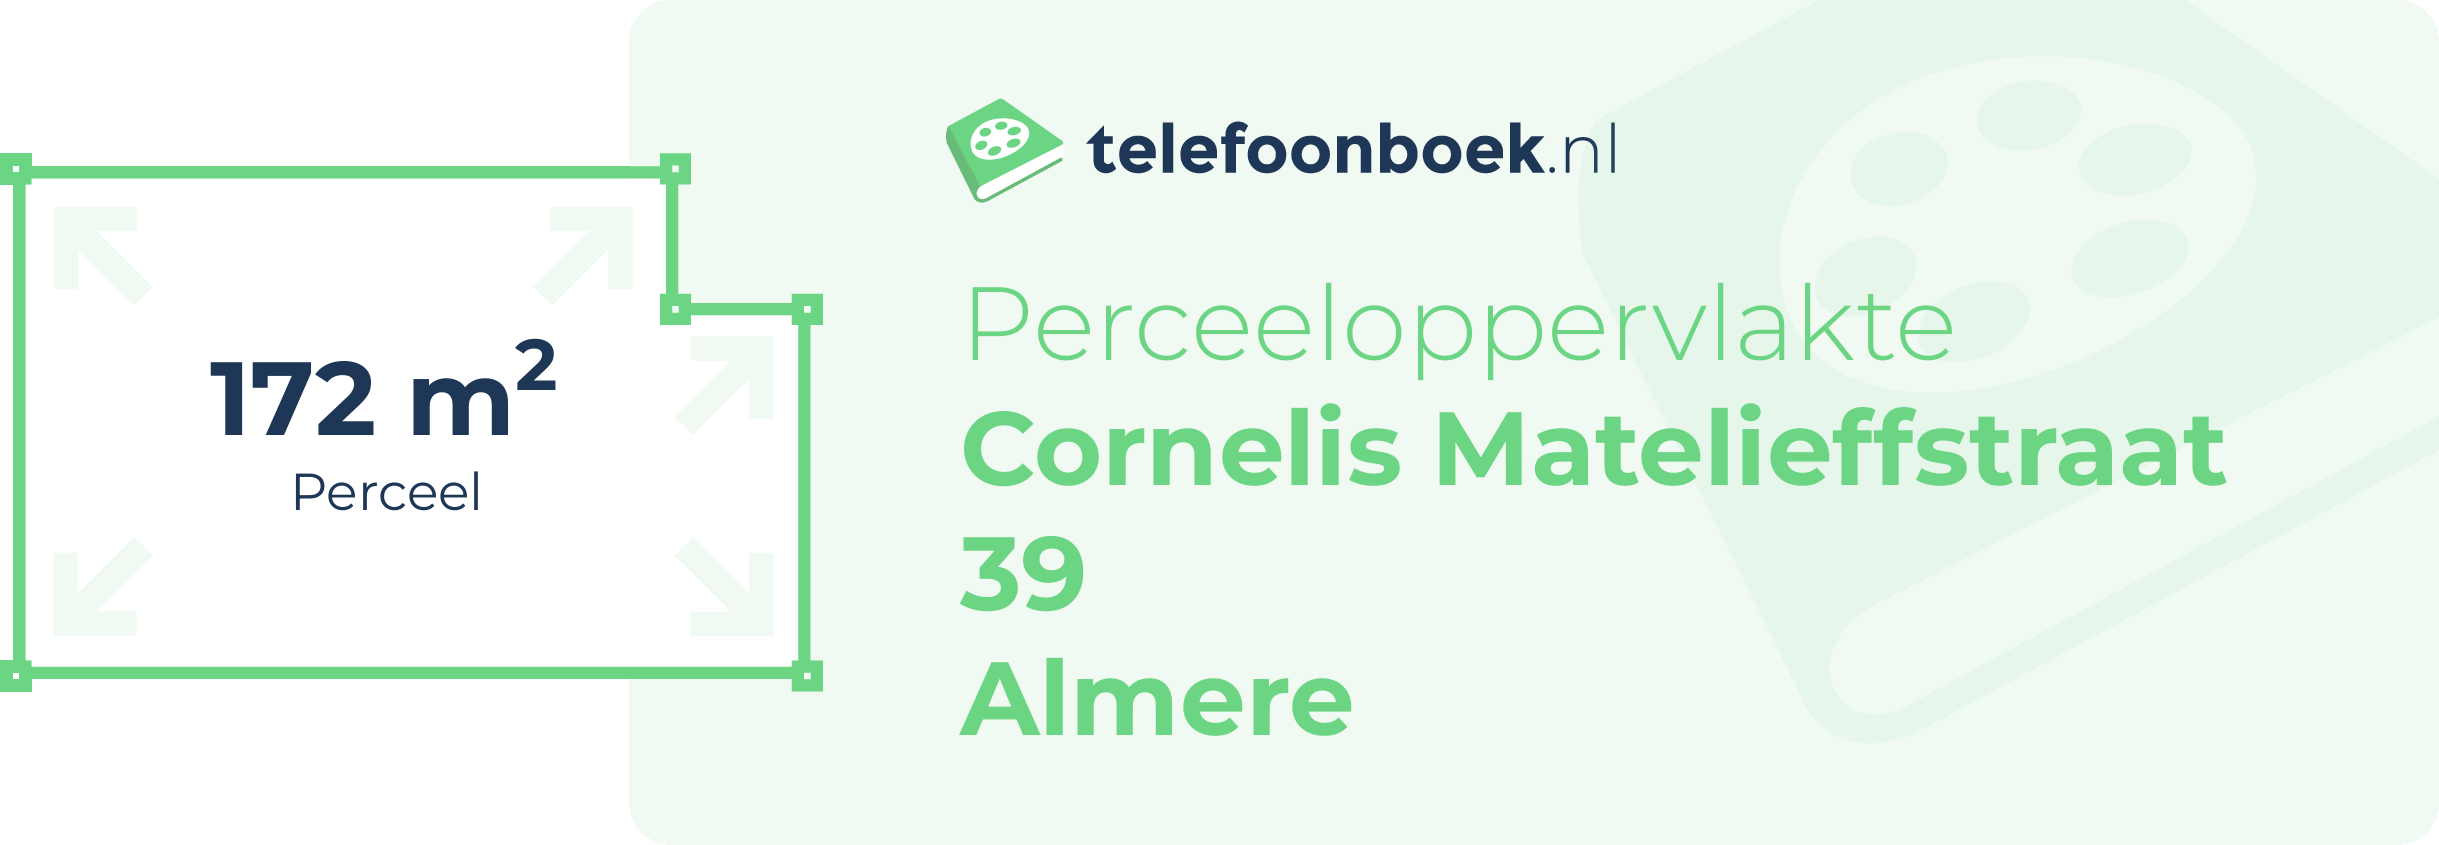 Perceeloppervlakte Cornelis Matelieffstraat 39 Almere